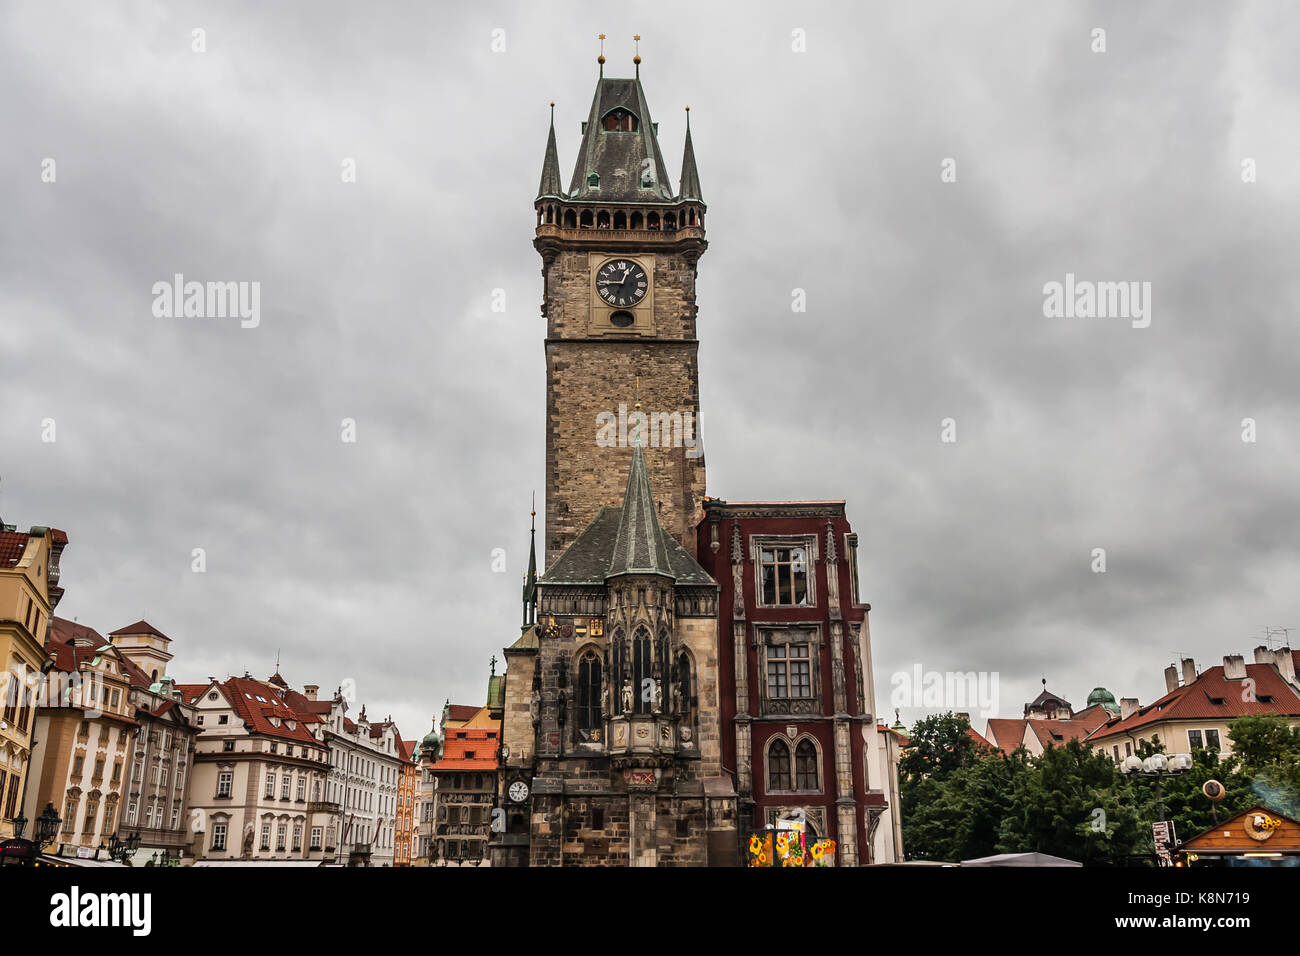 La torre del reloj astronómico de Praga Foto de stock